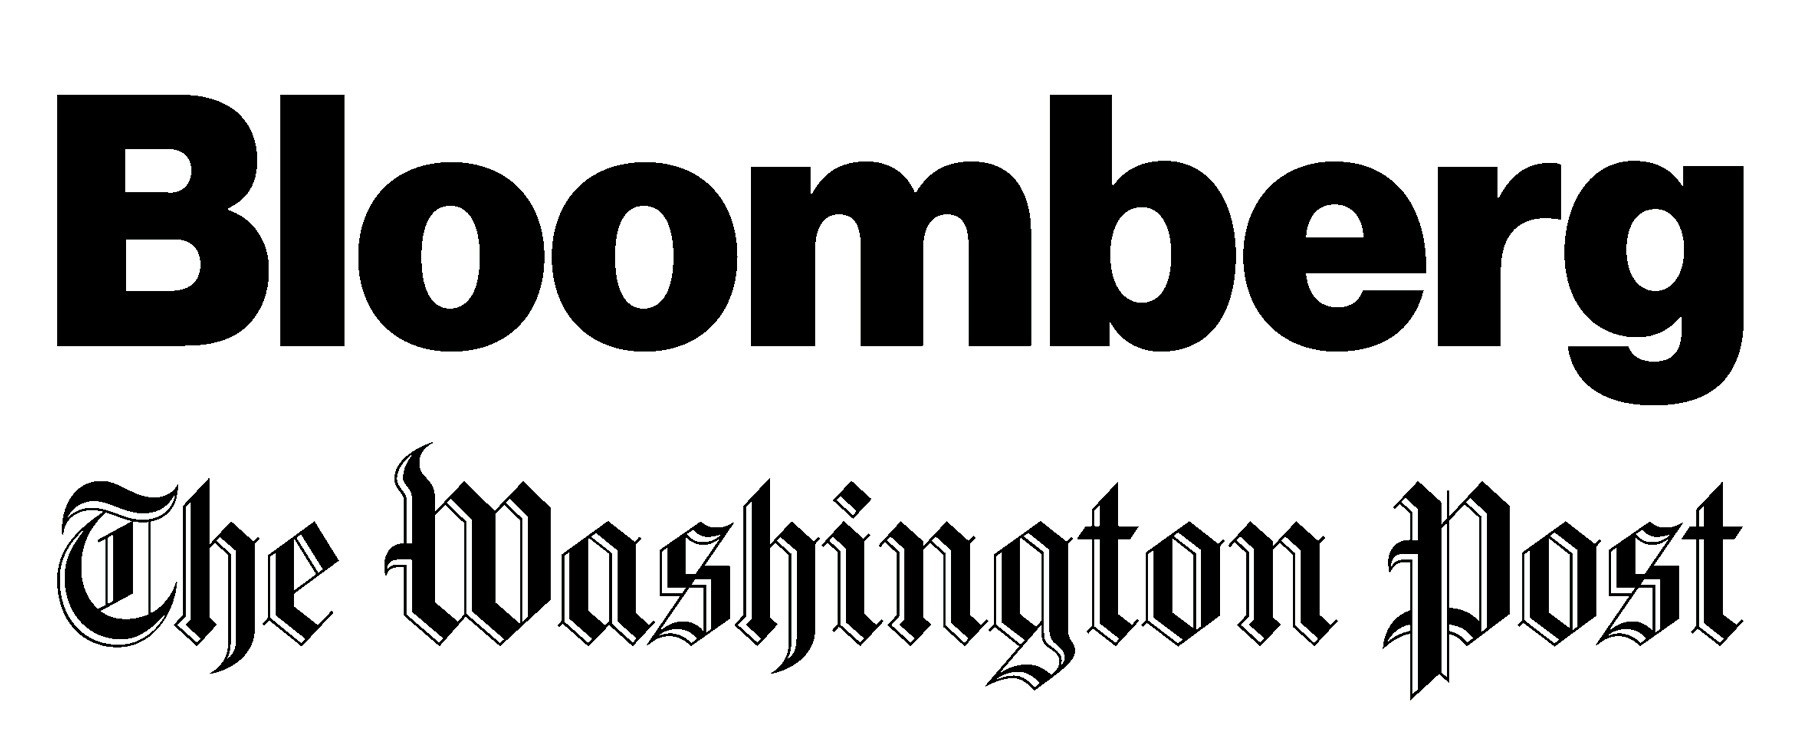 Bloomberg and Washington Post logos. 